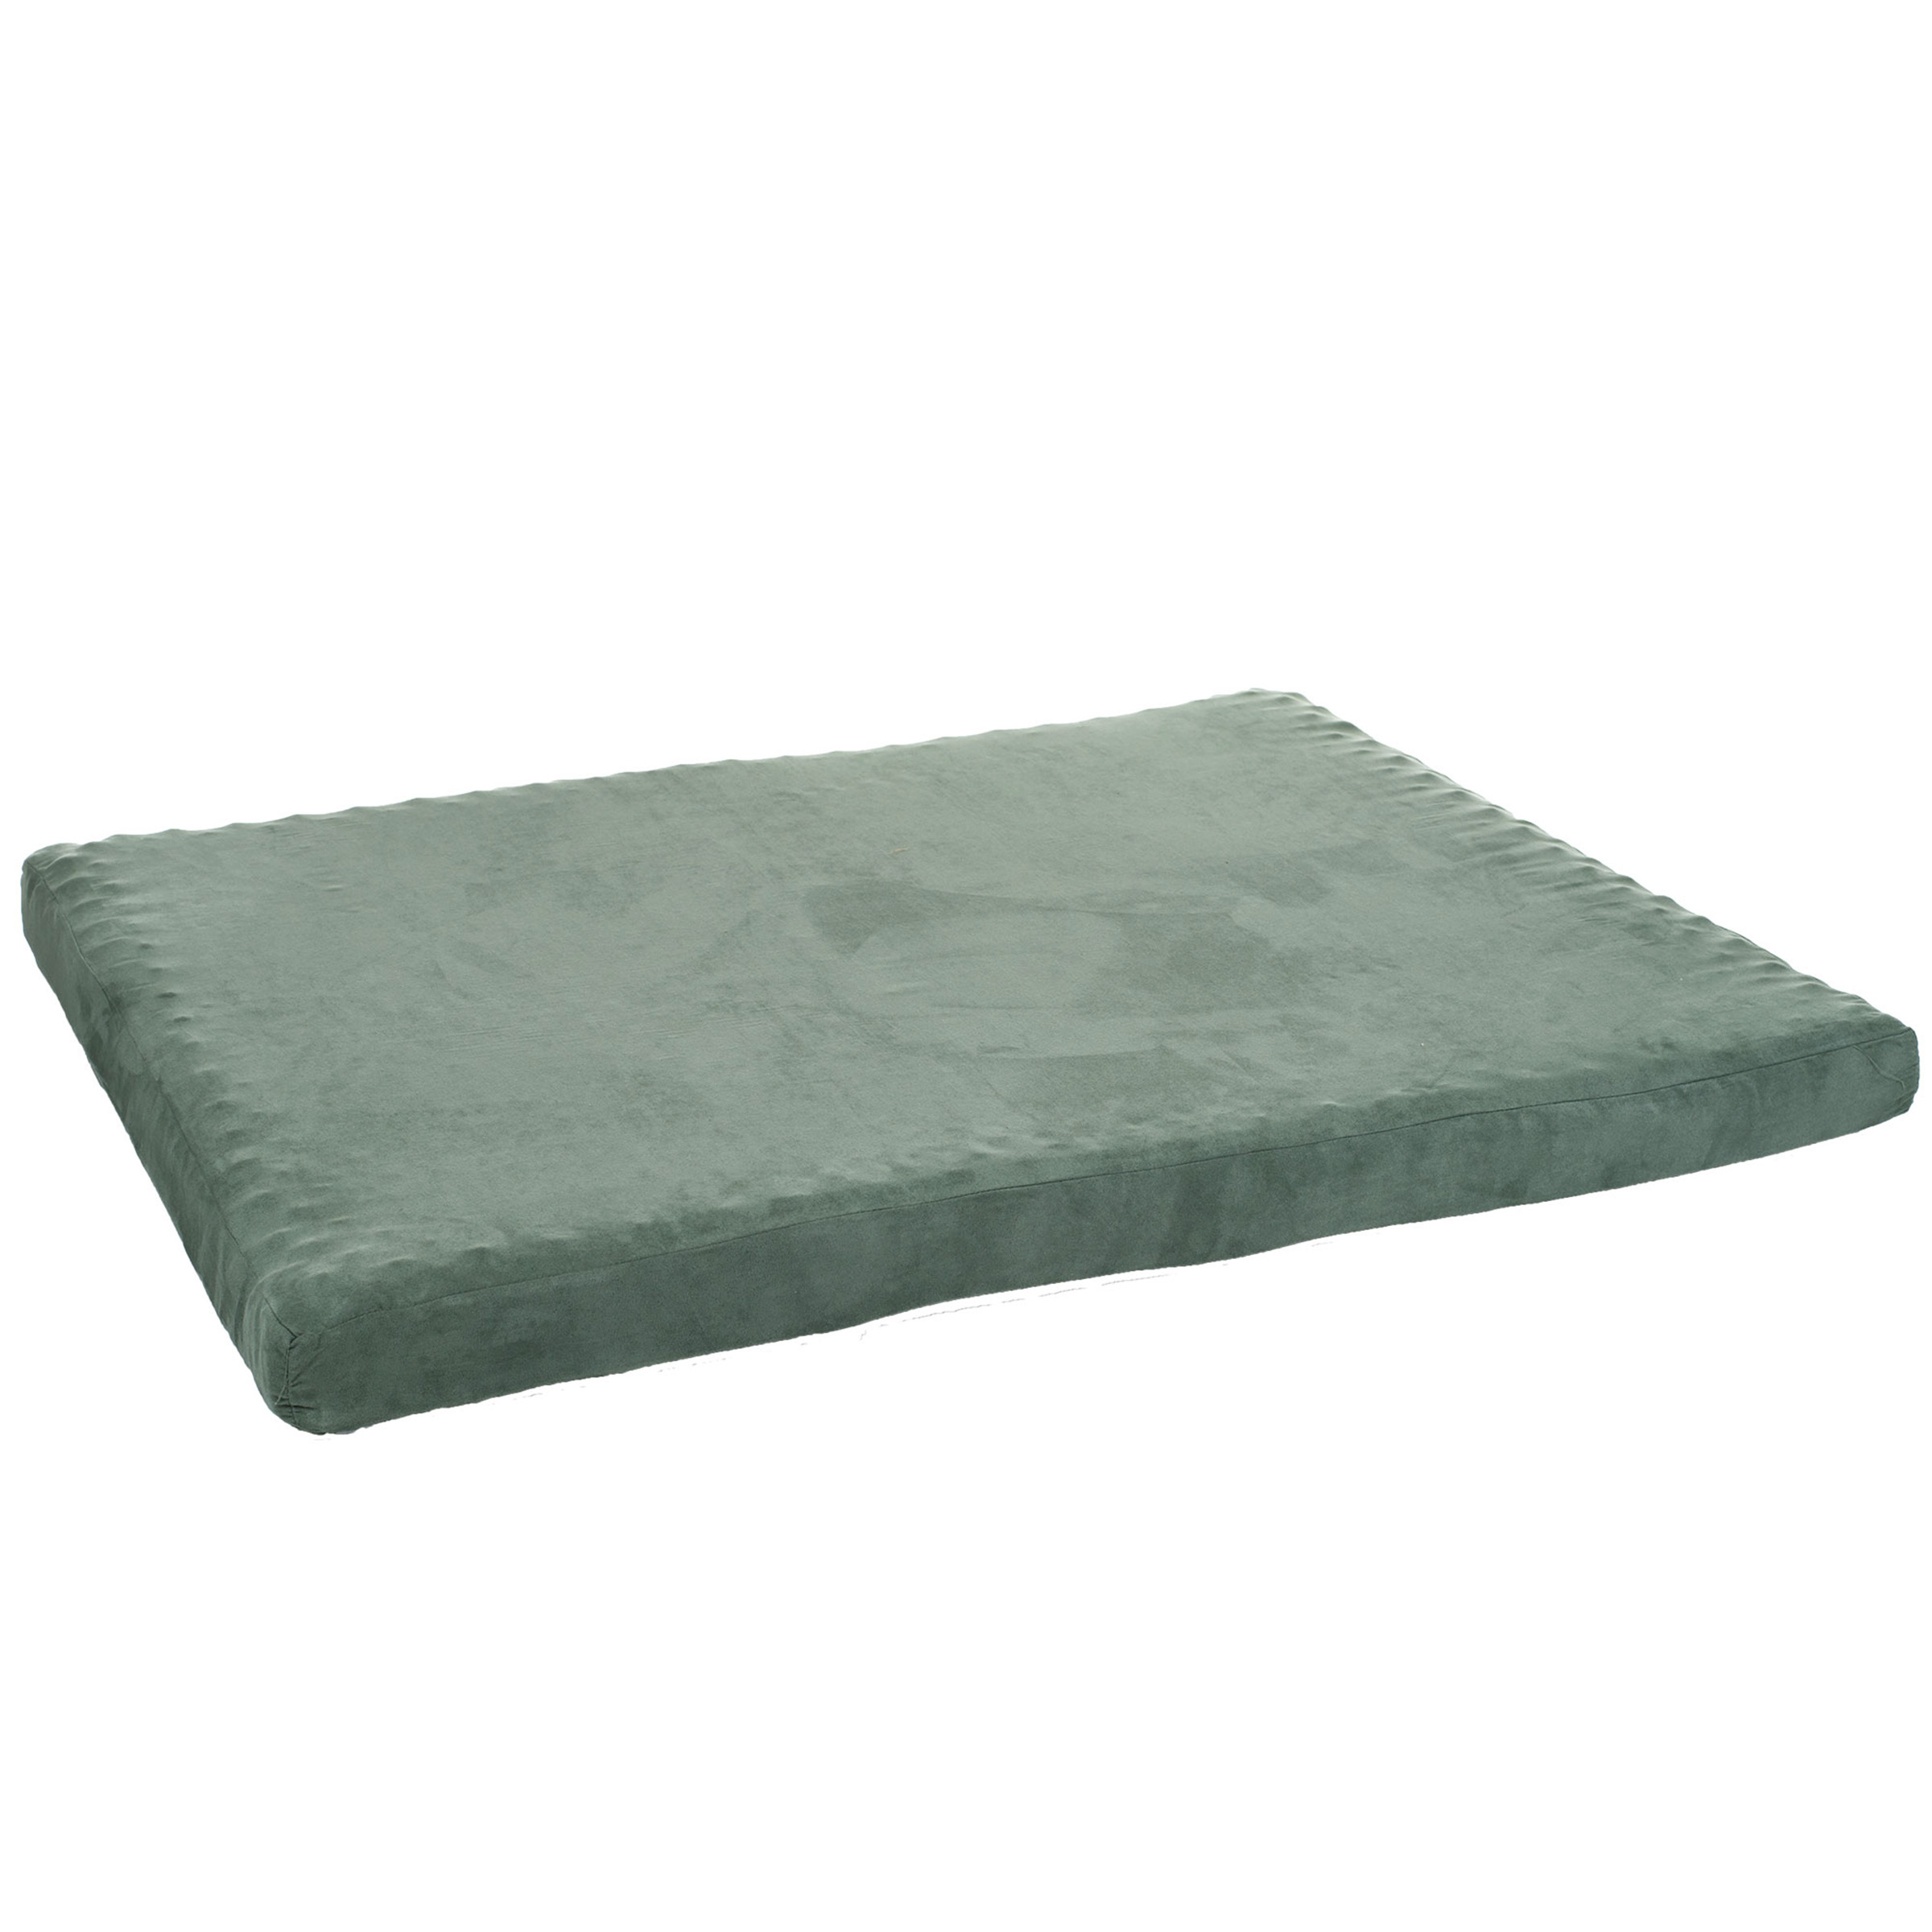 Orthopedic Super Foam Pet Bed With Washable Cover, Medium